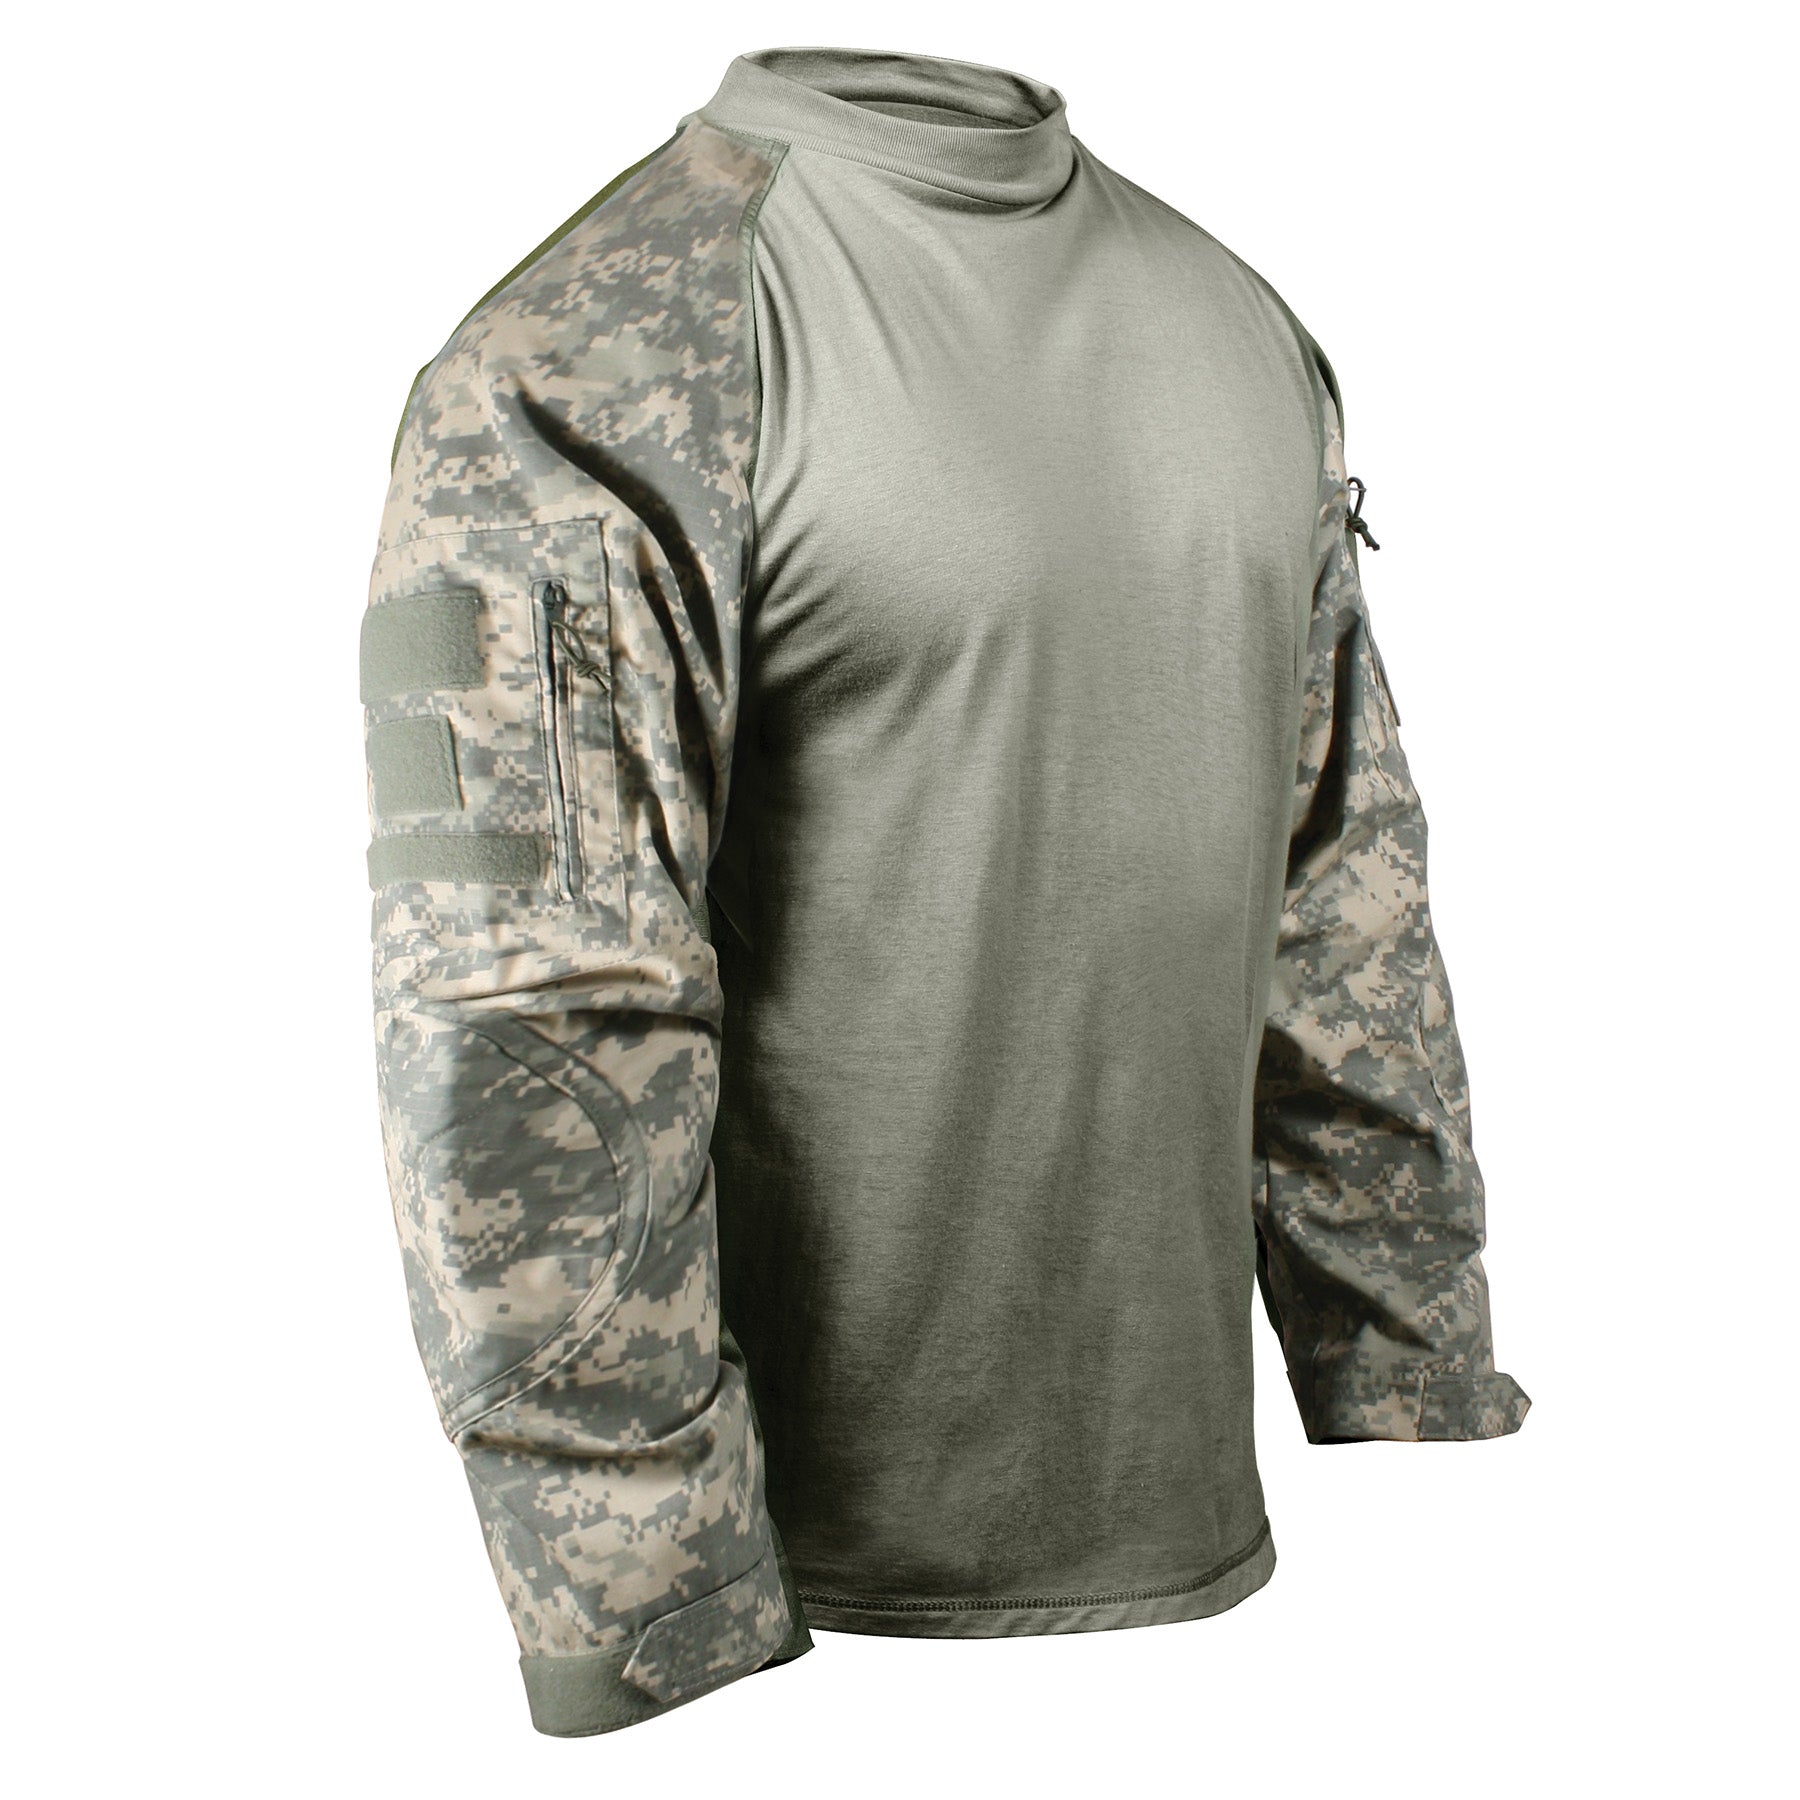 Digital Camo Poly/Cotton/Nylon/Cotton Tactical Combat Shirts ACU Digital Camo